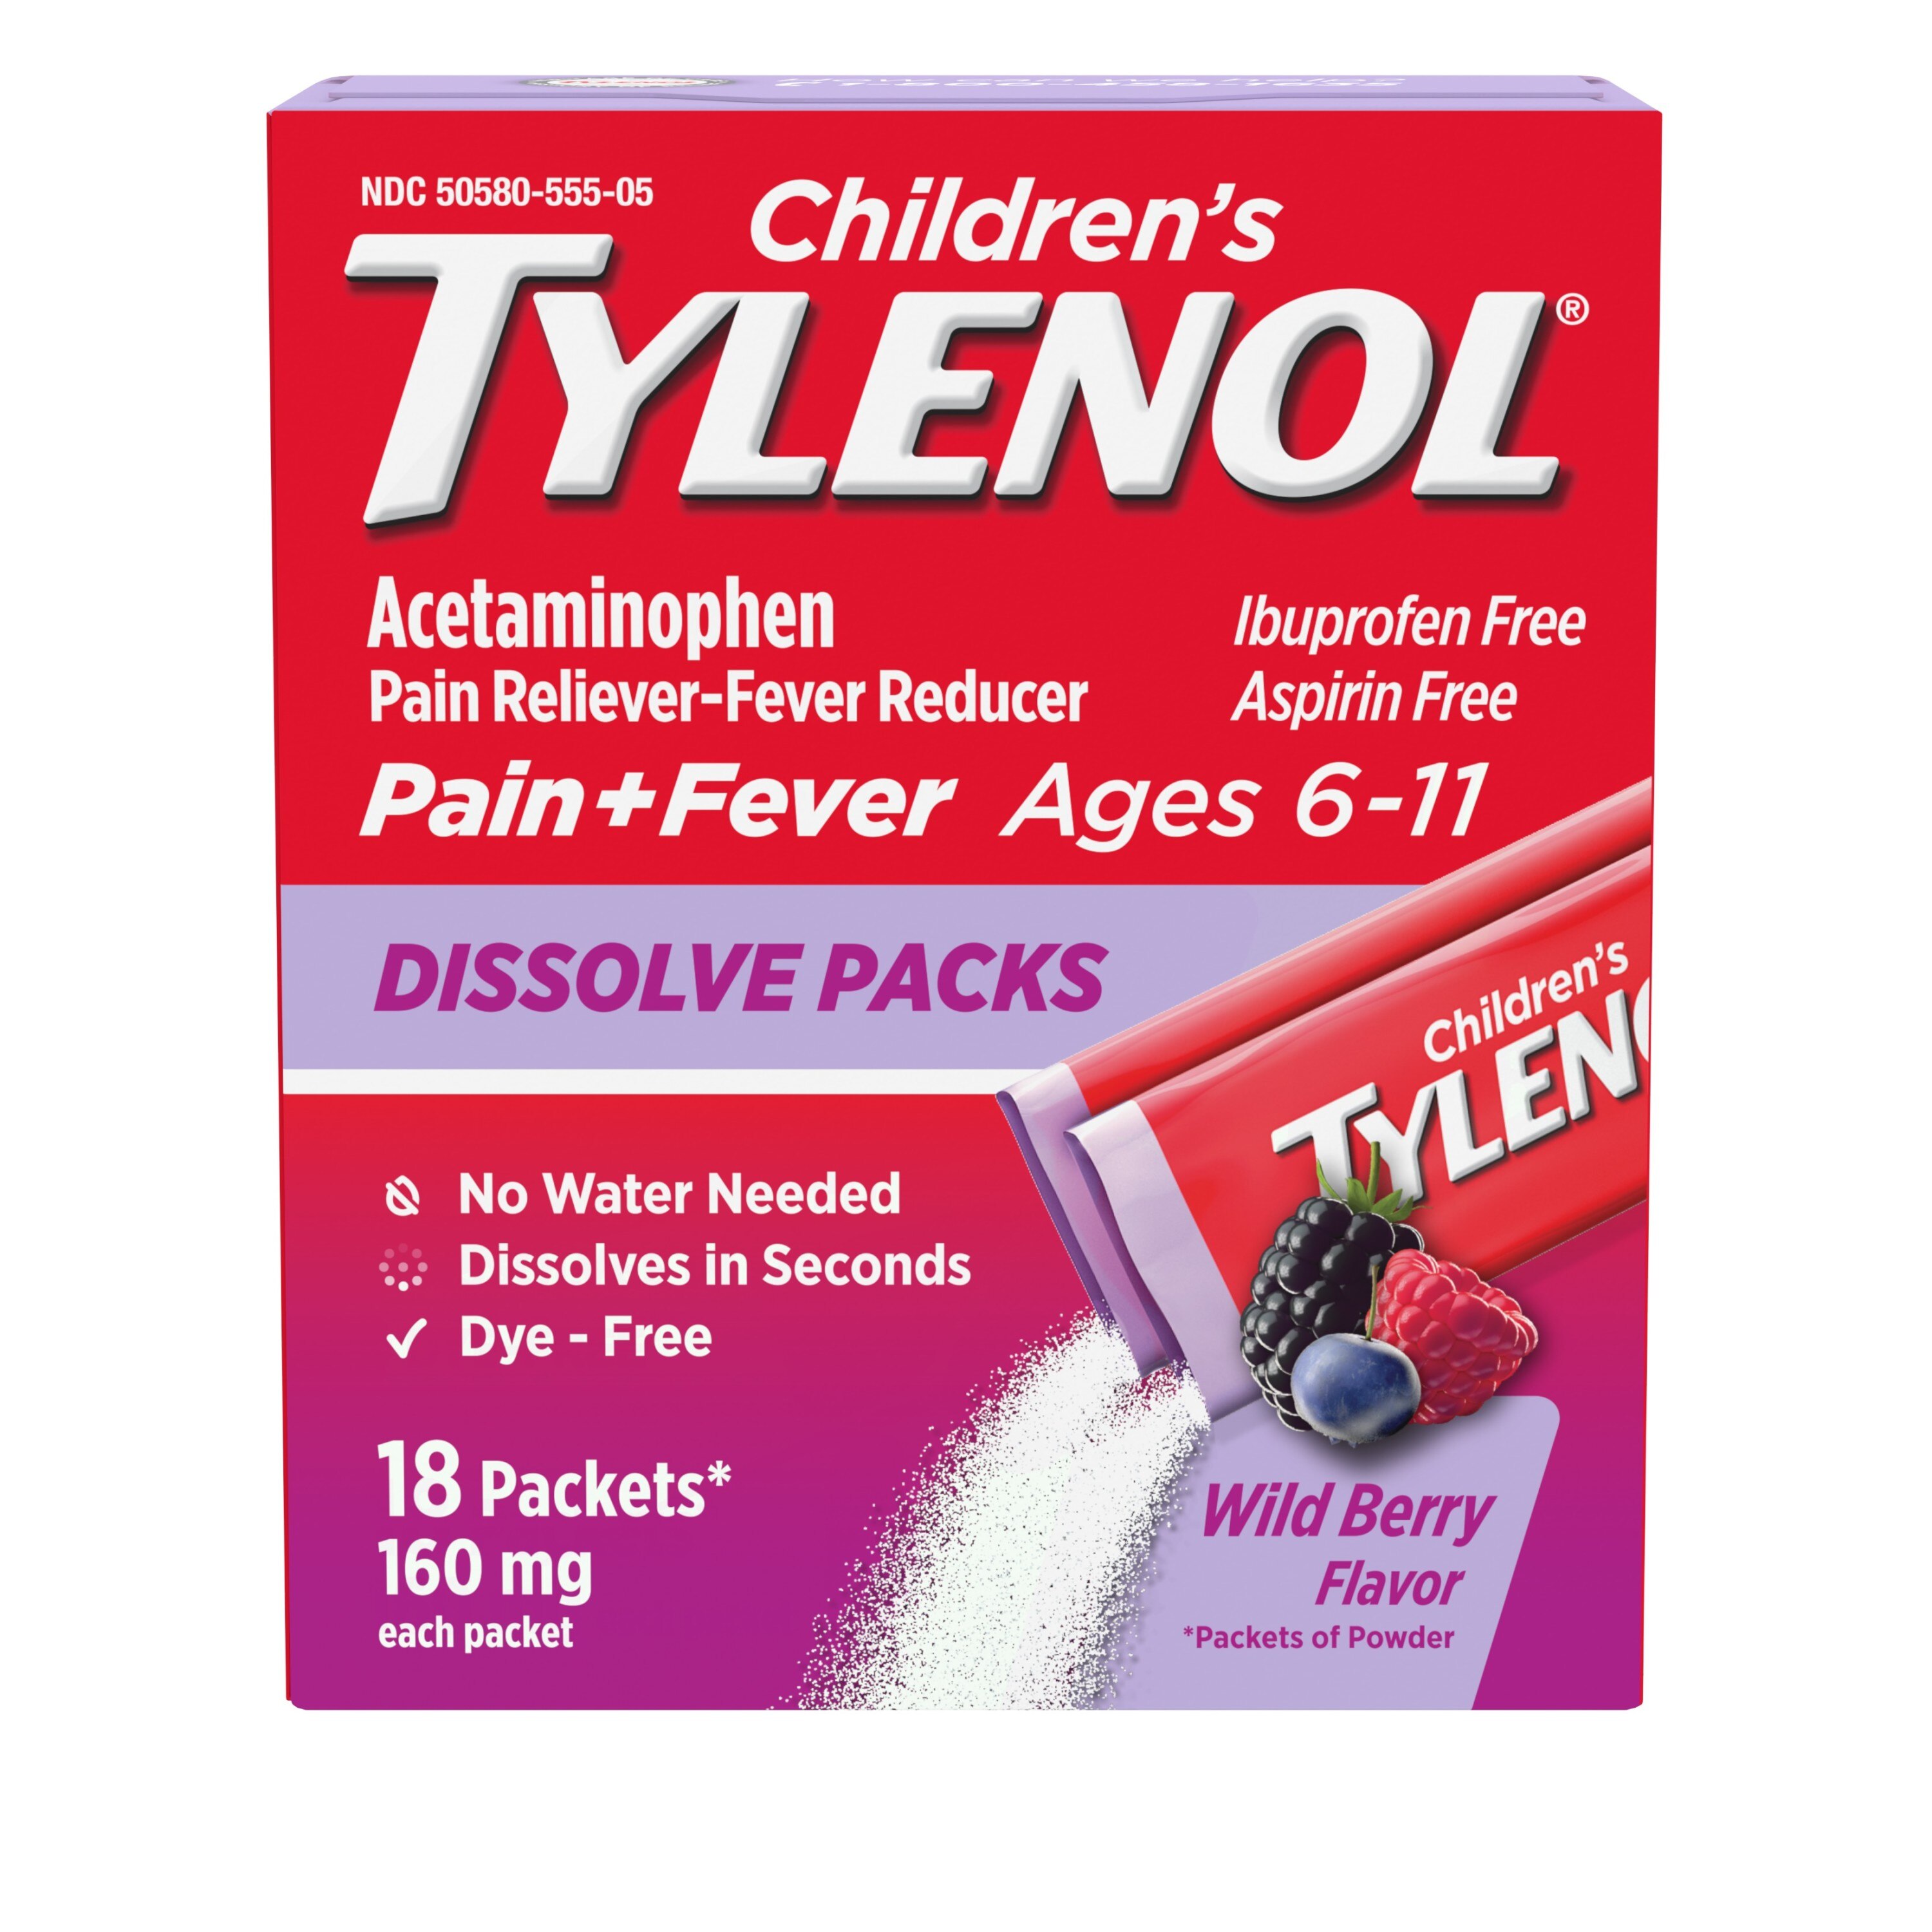 Children's Tylenol - Acetaminophen soluble en sobre, pediátrico, Wild Berry, 18 u.